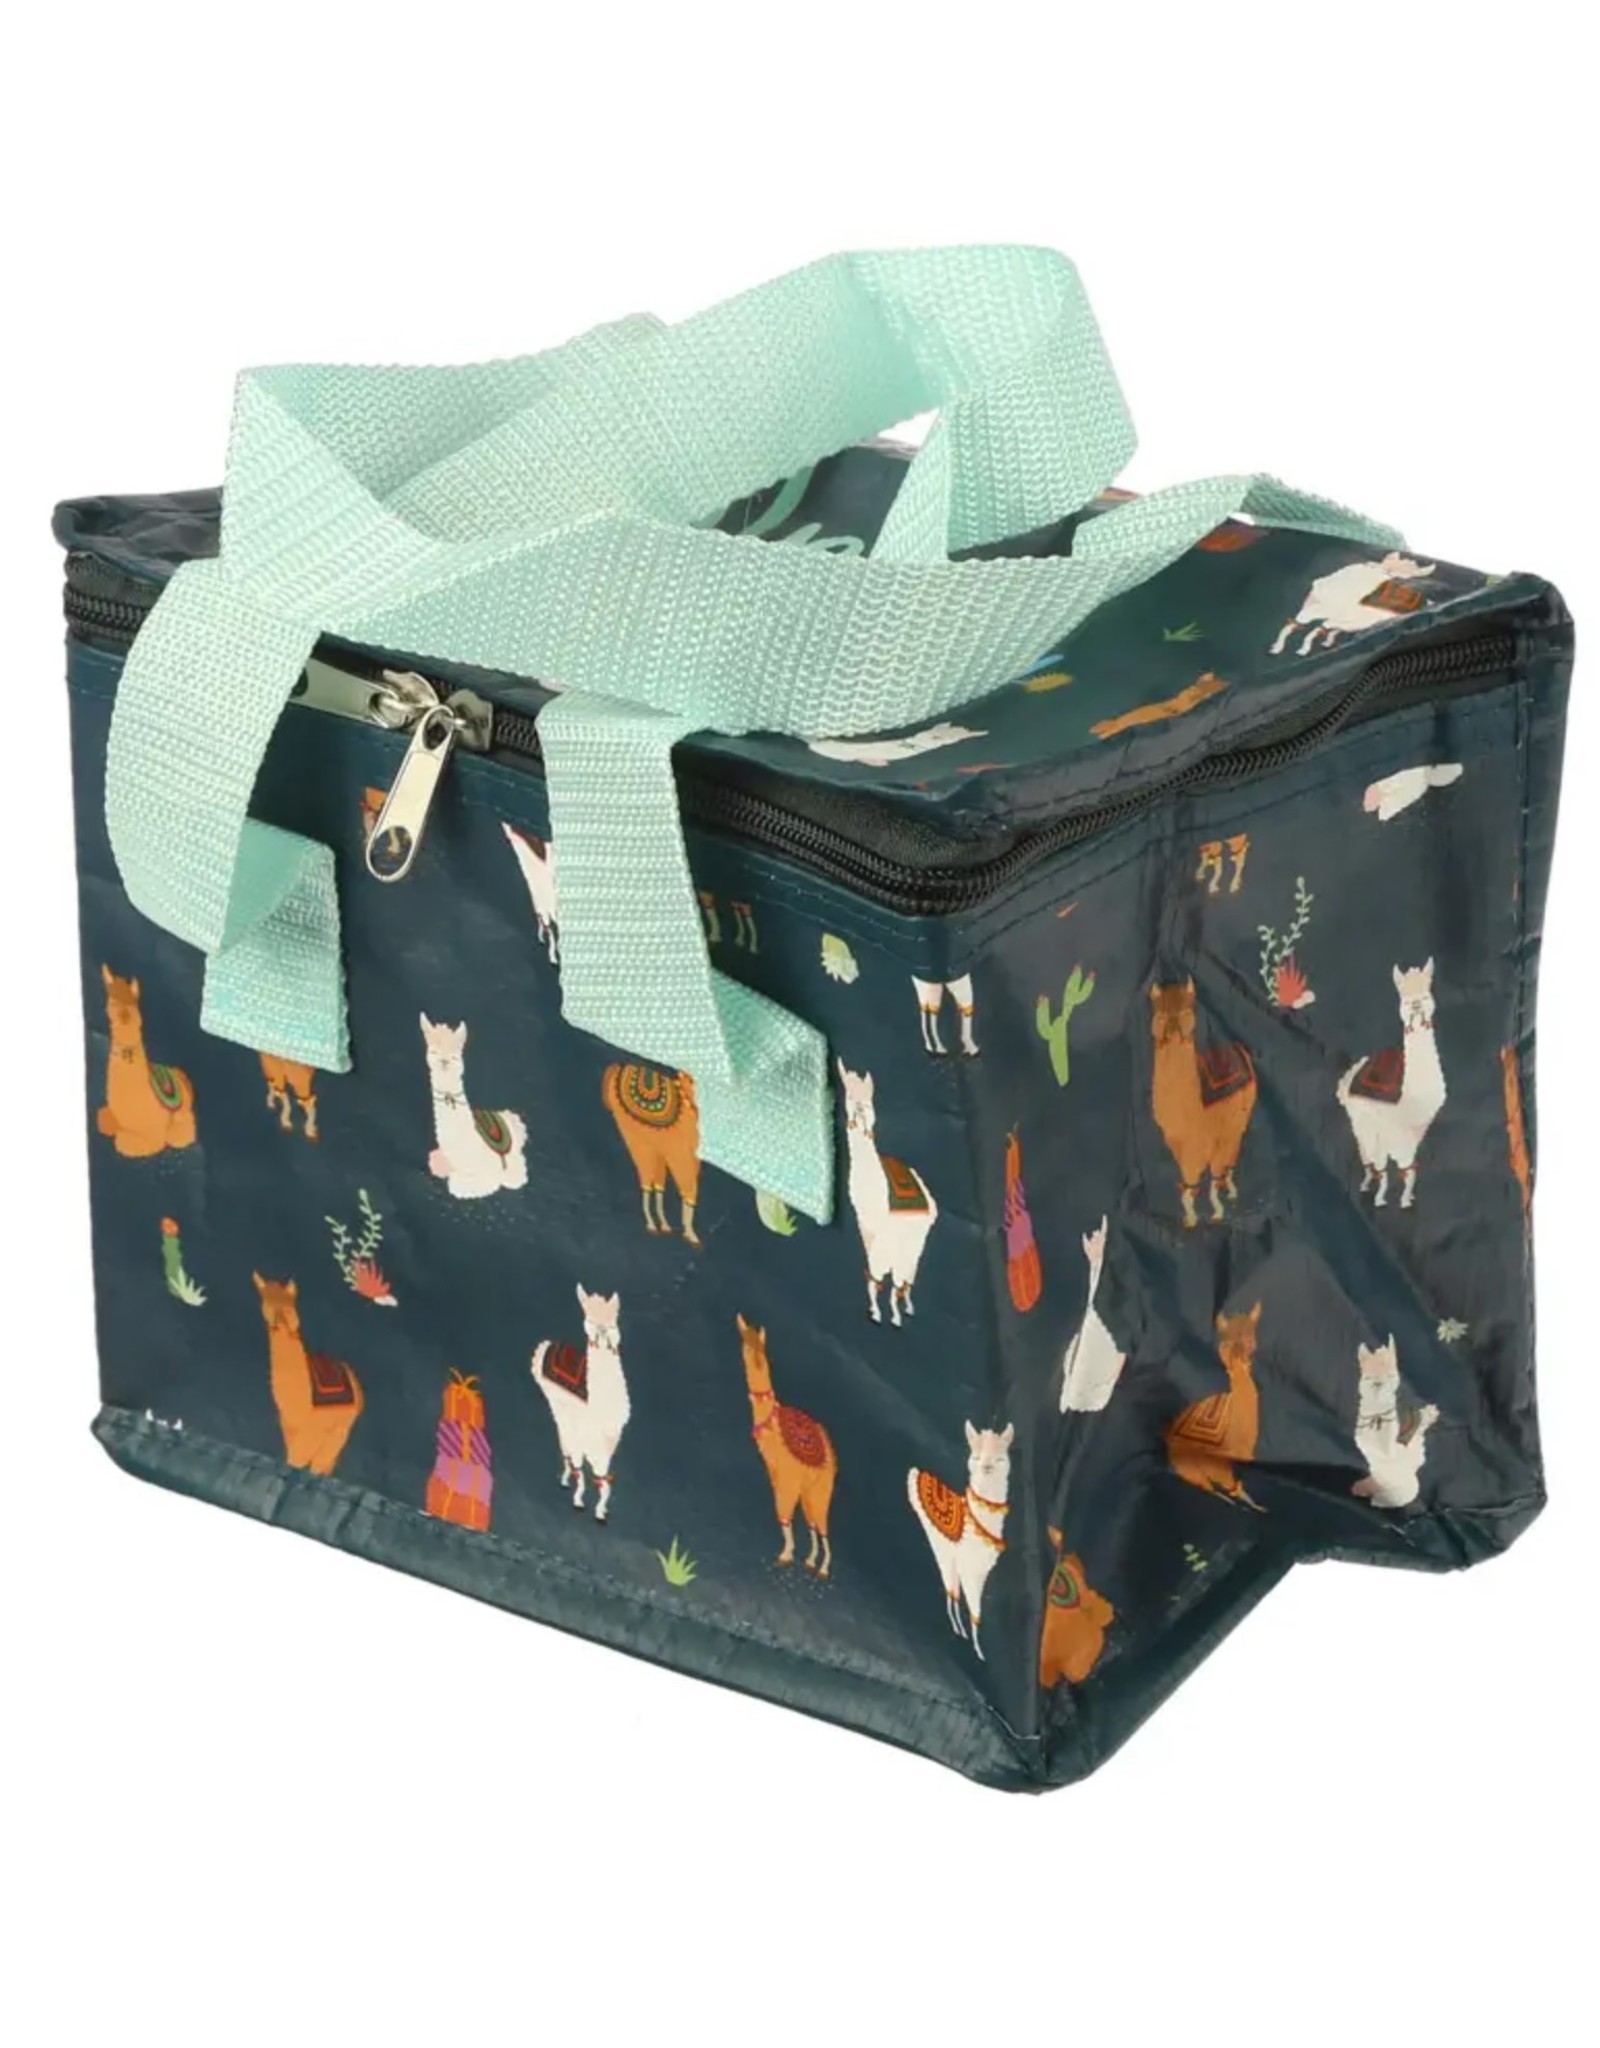 Puckator LTD Alpaca Woven Cool Bag Lunch Bag